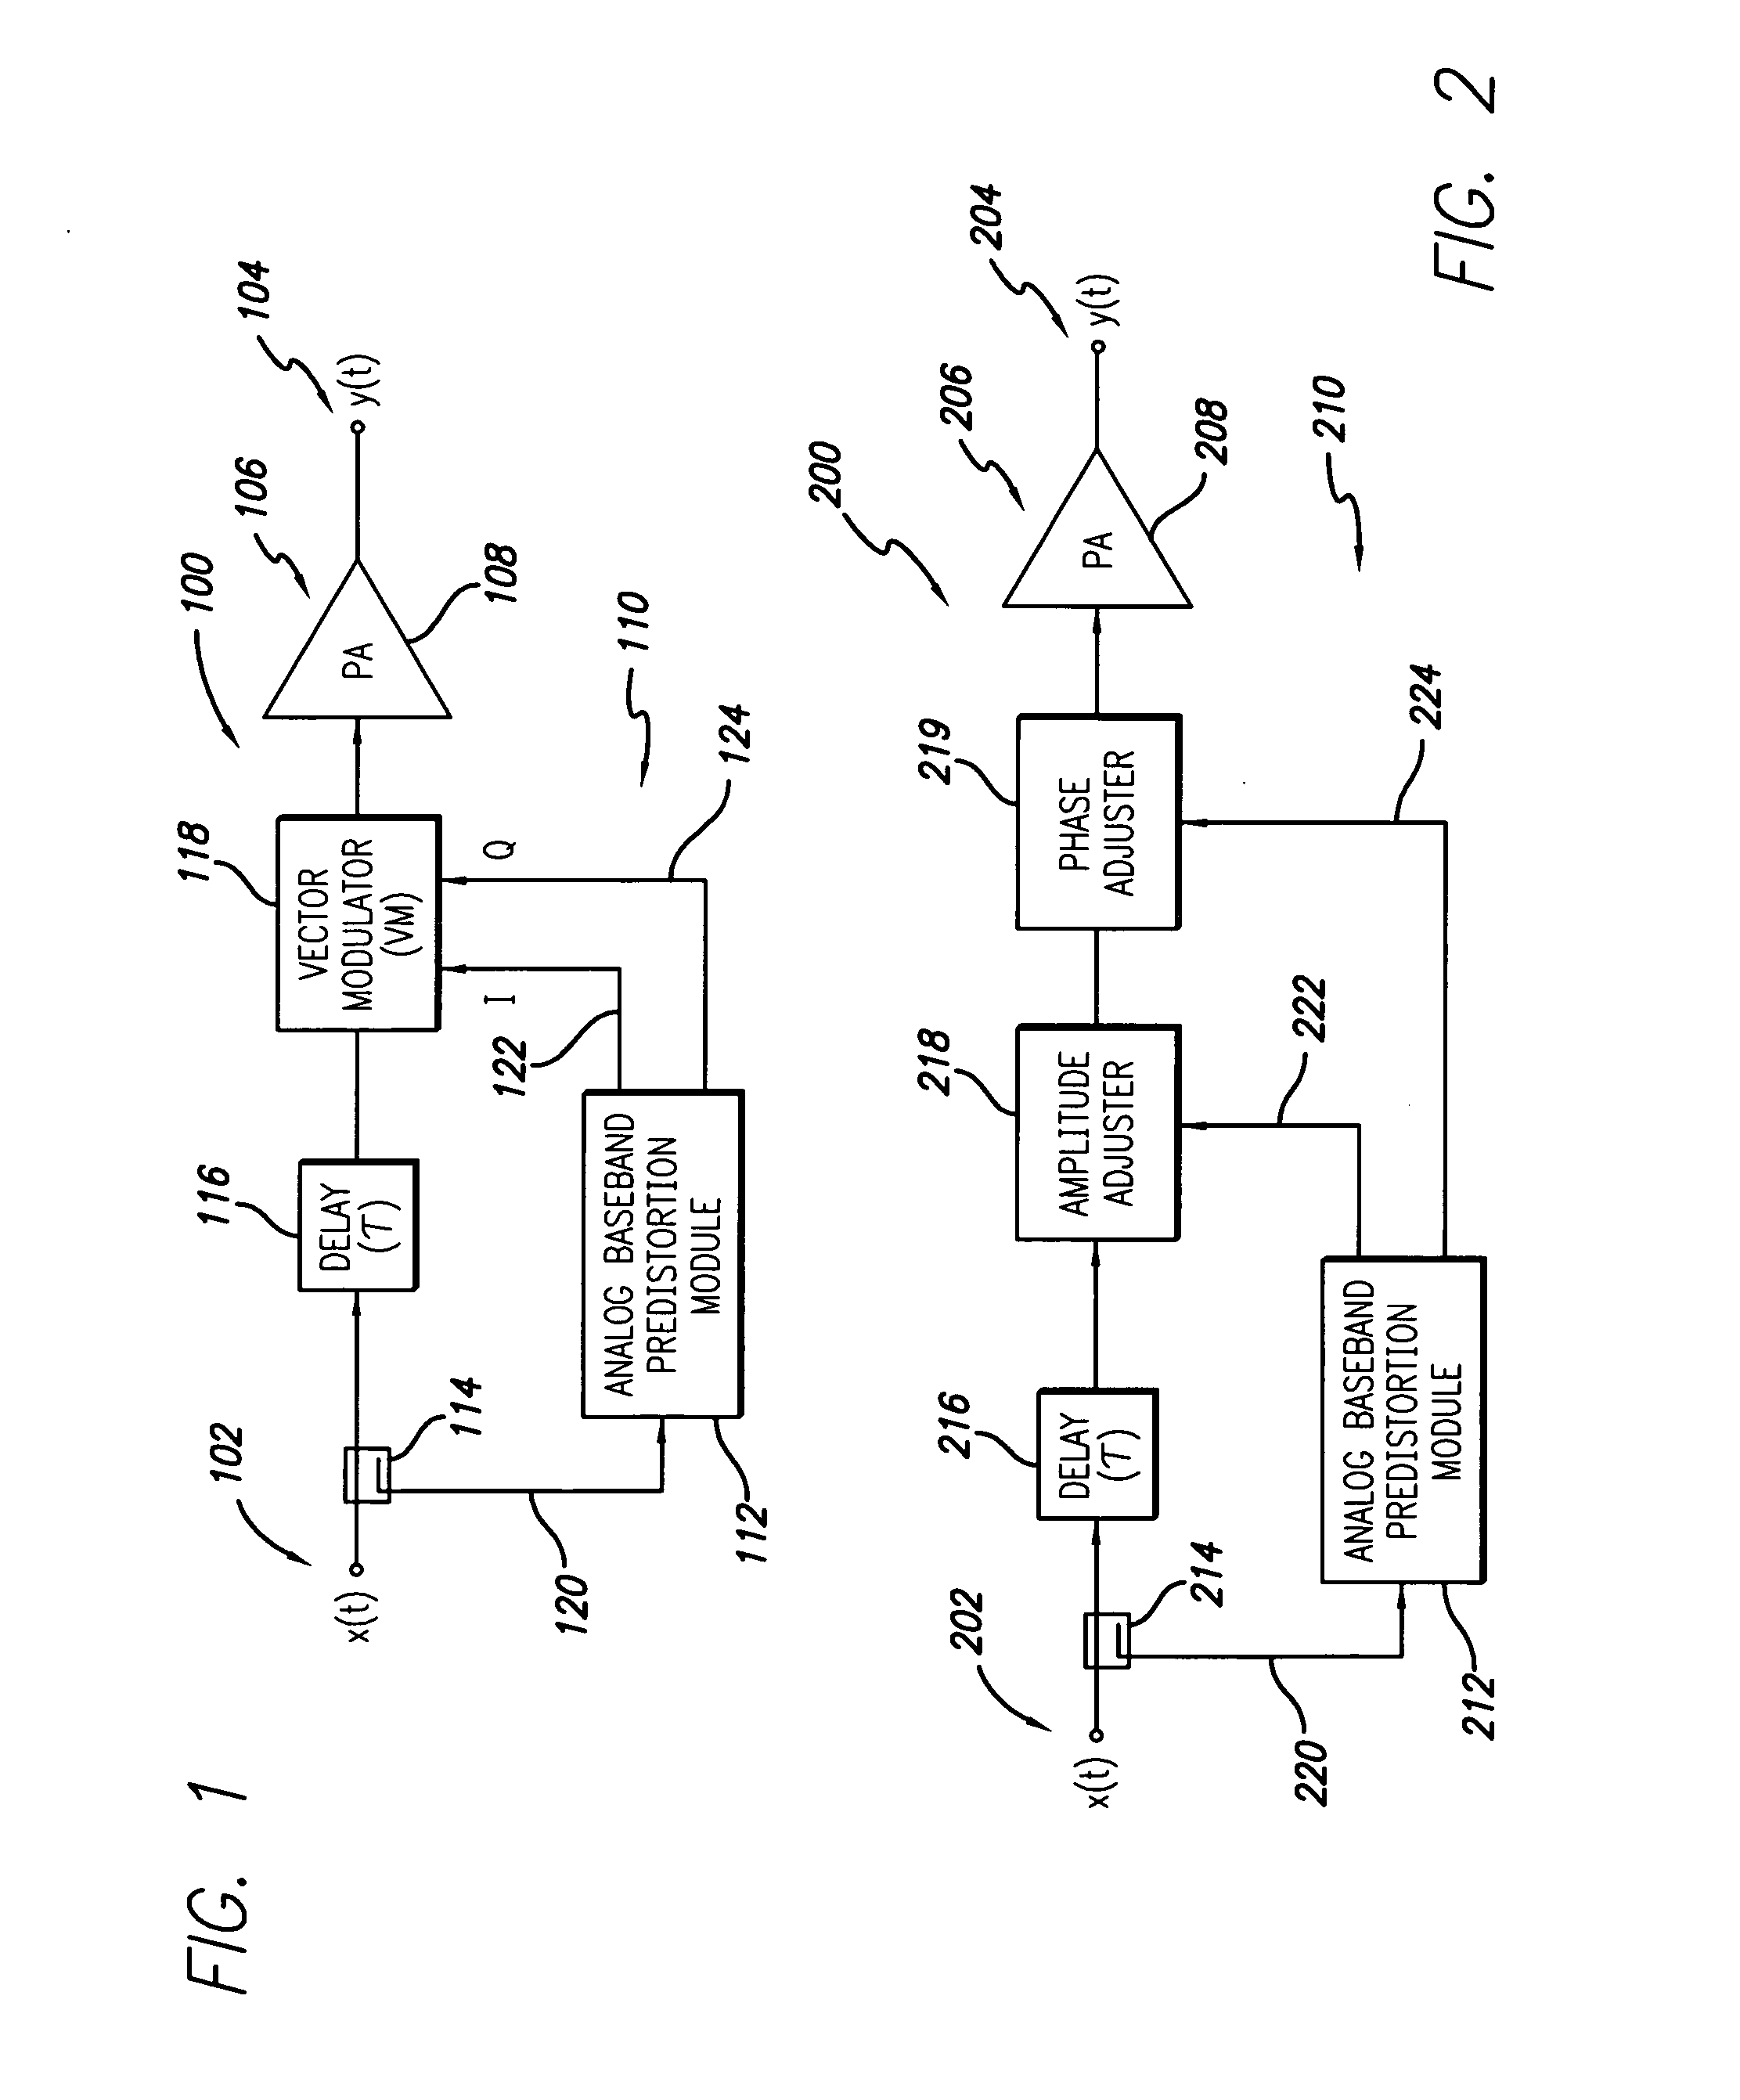 RF power amplifier system employing an analog predistortion module using zero crossings